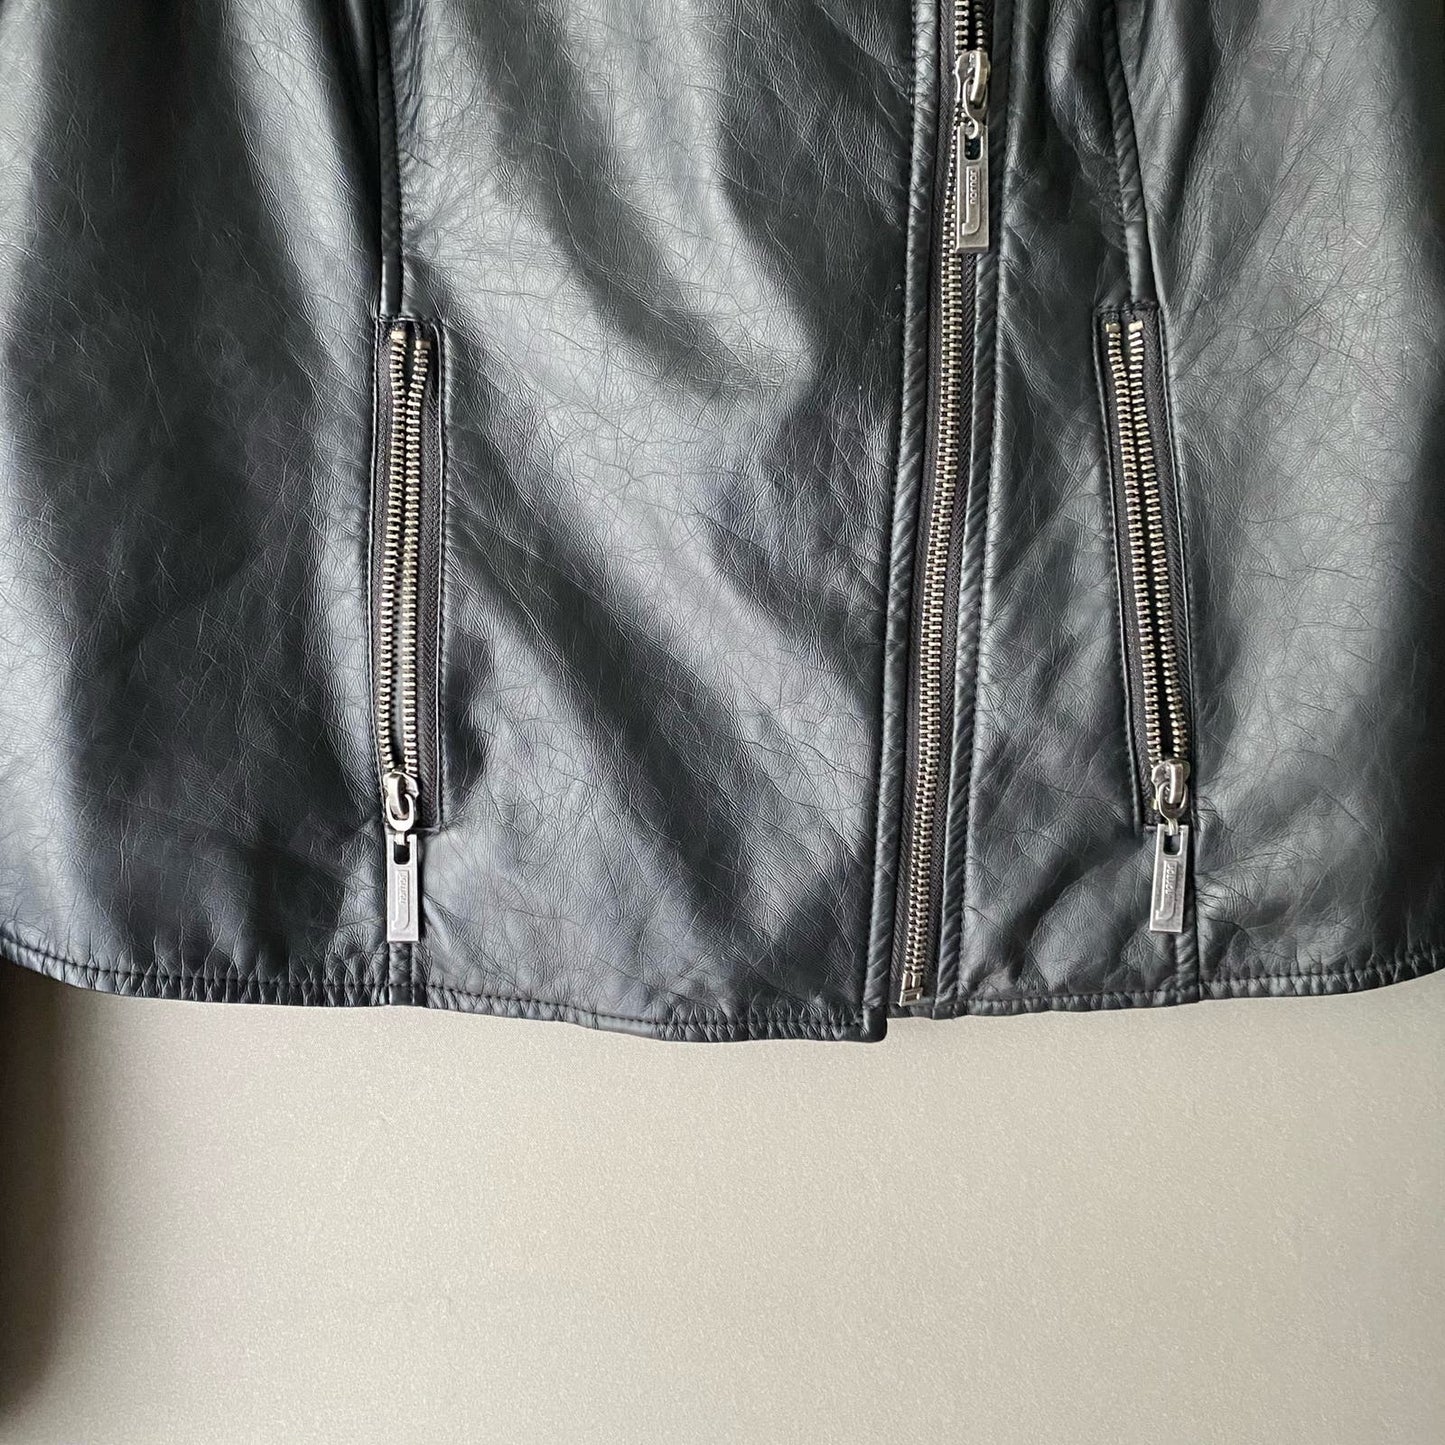 JOUJOU sz L motorcycle vegan leather jacket